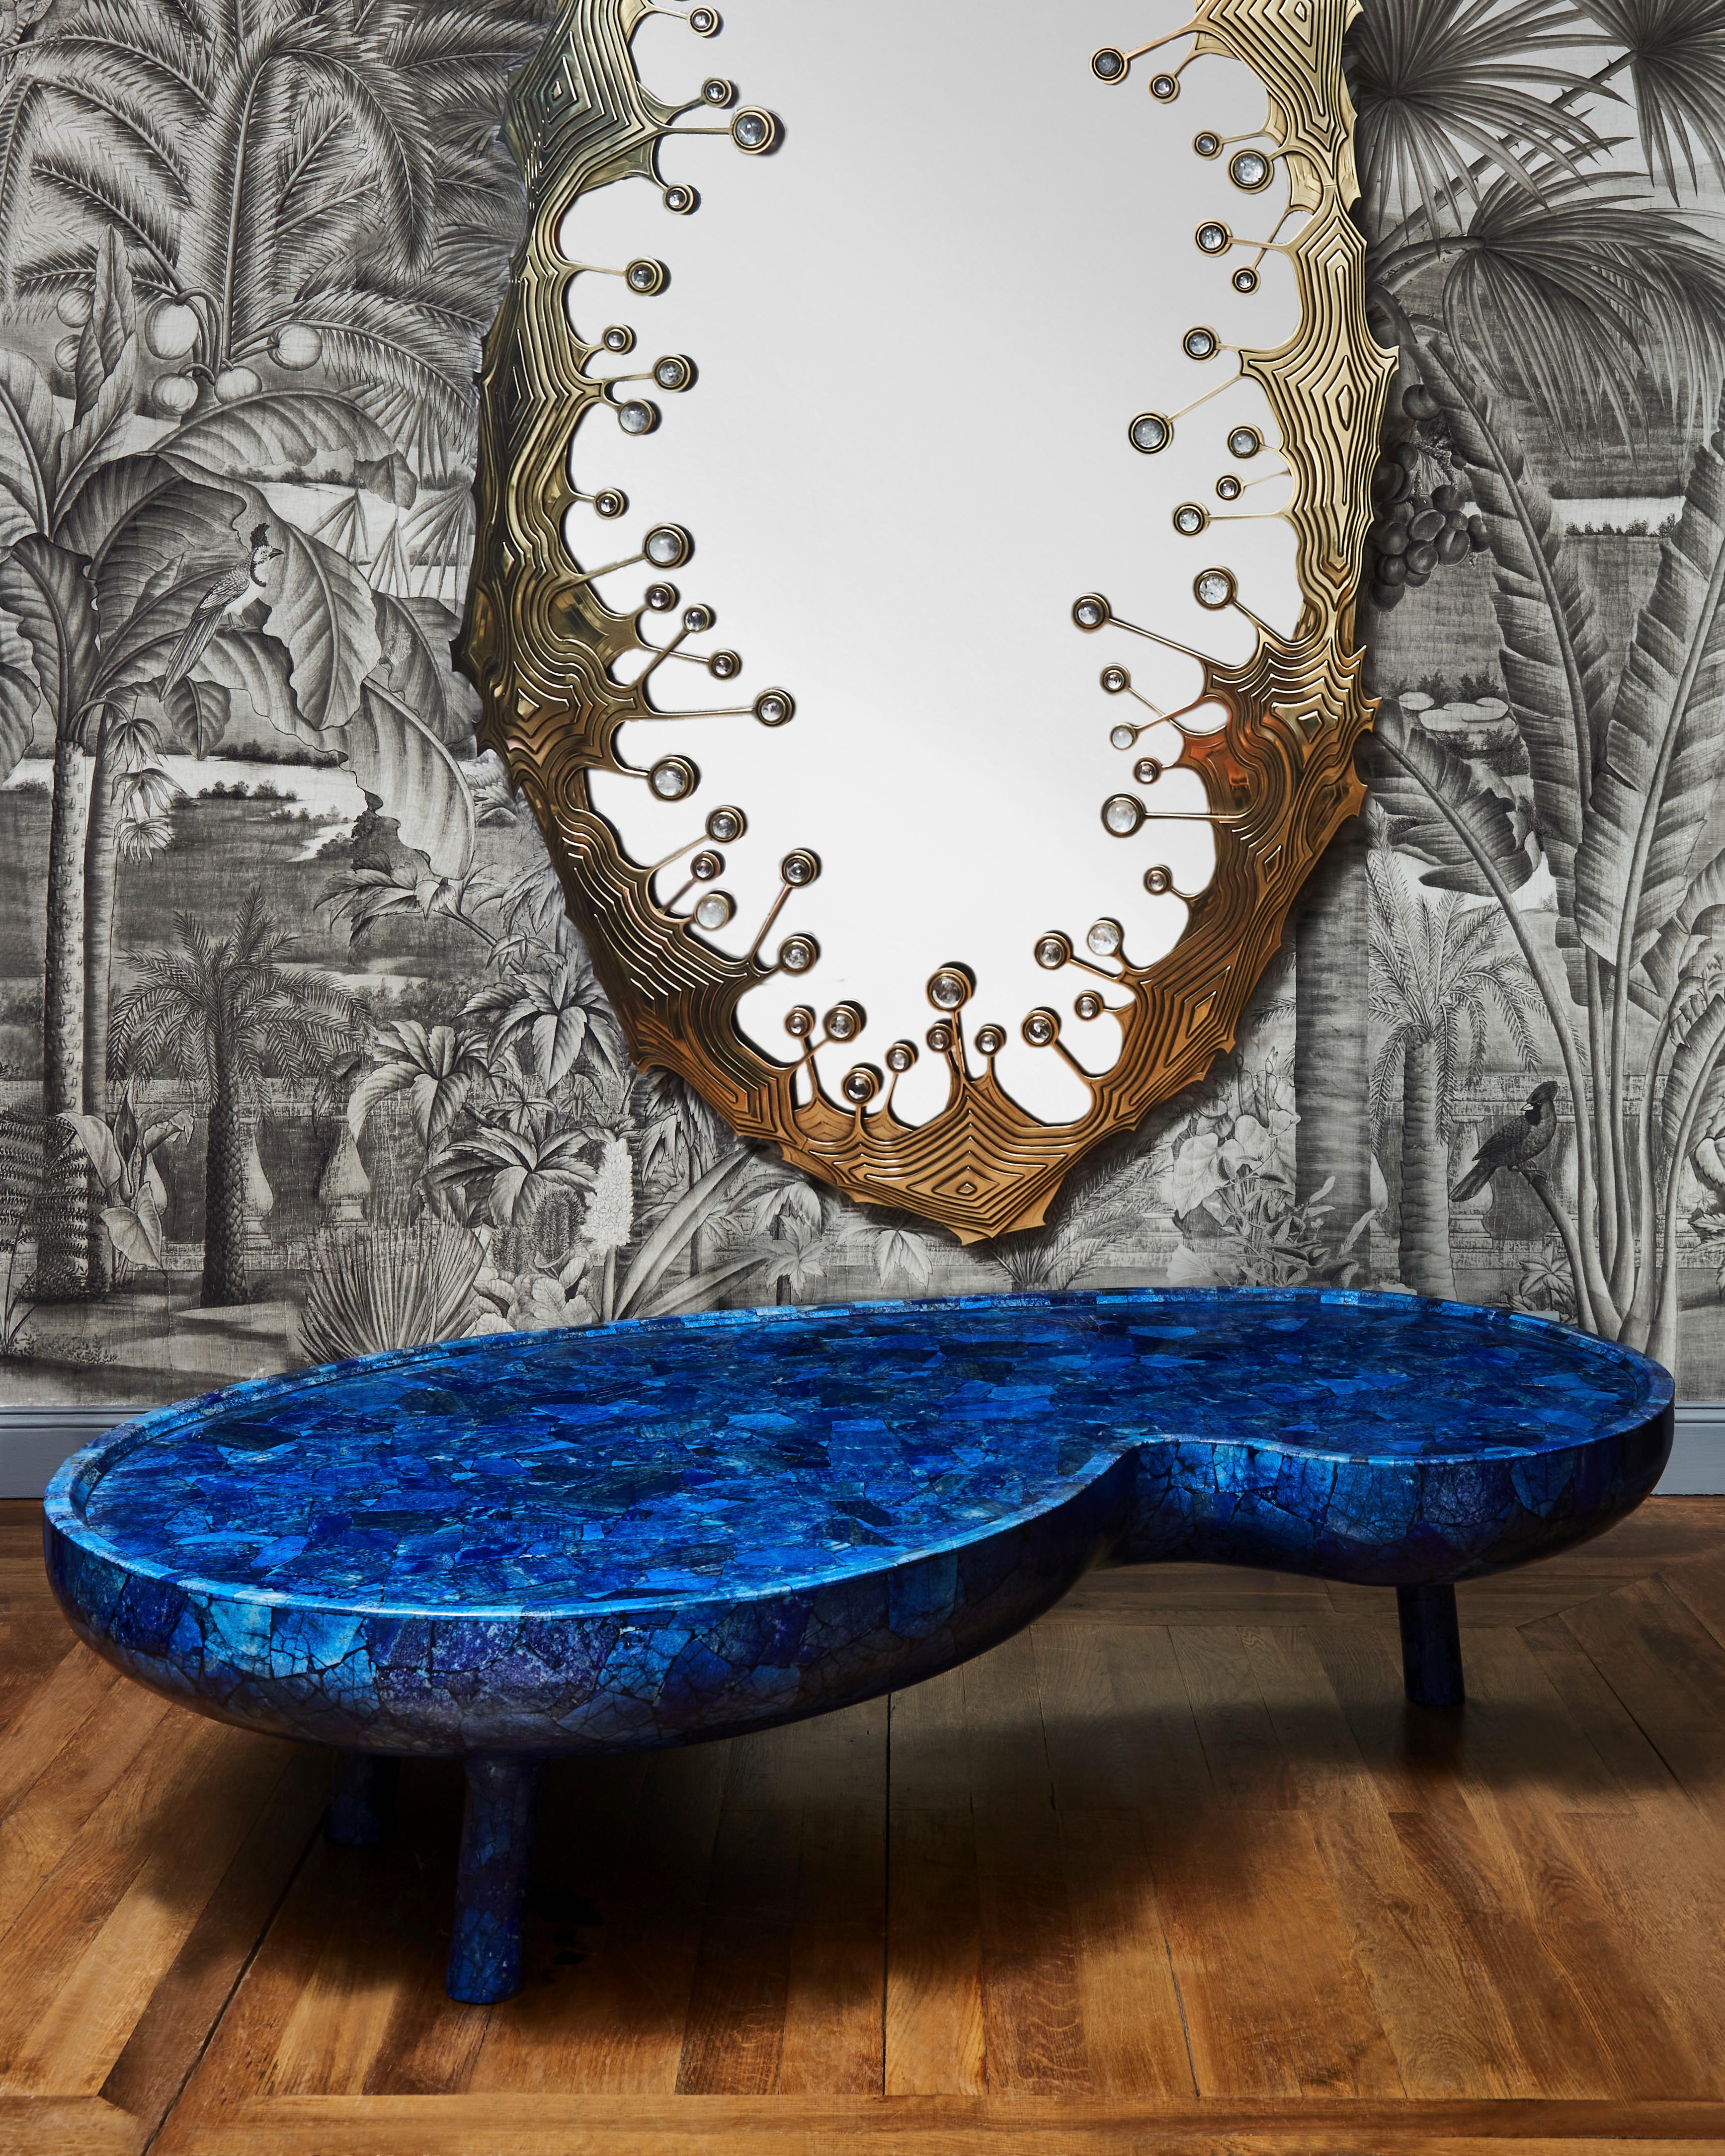 Unique coffee table in lapis lazuli by Studio Glustin.
France, 2022.